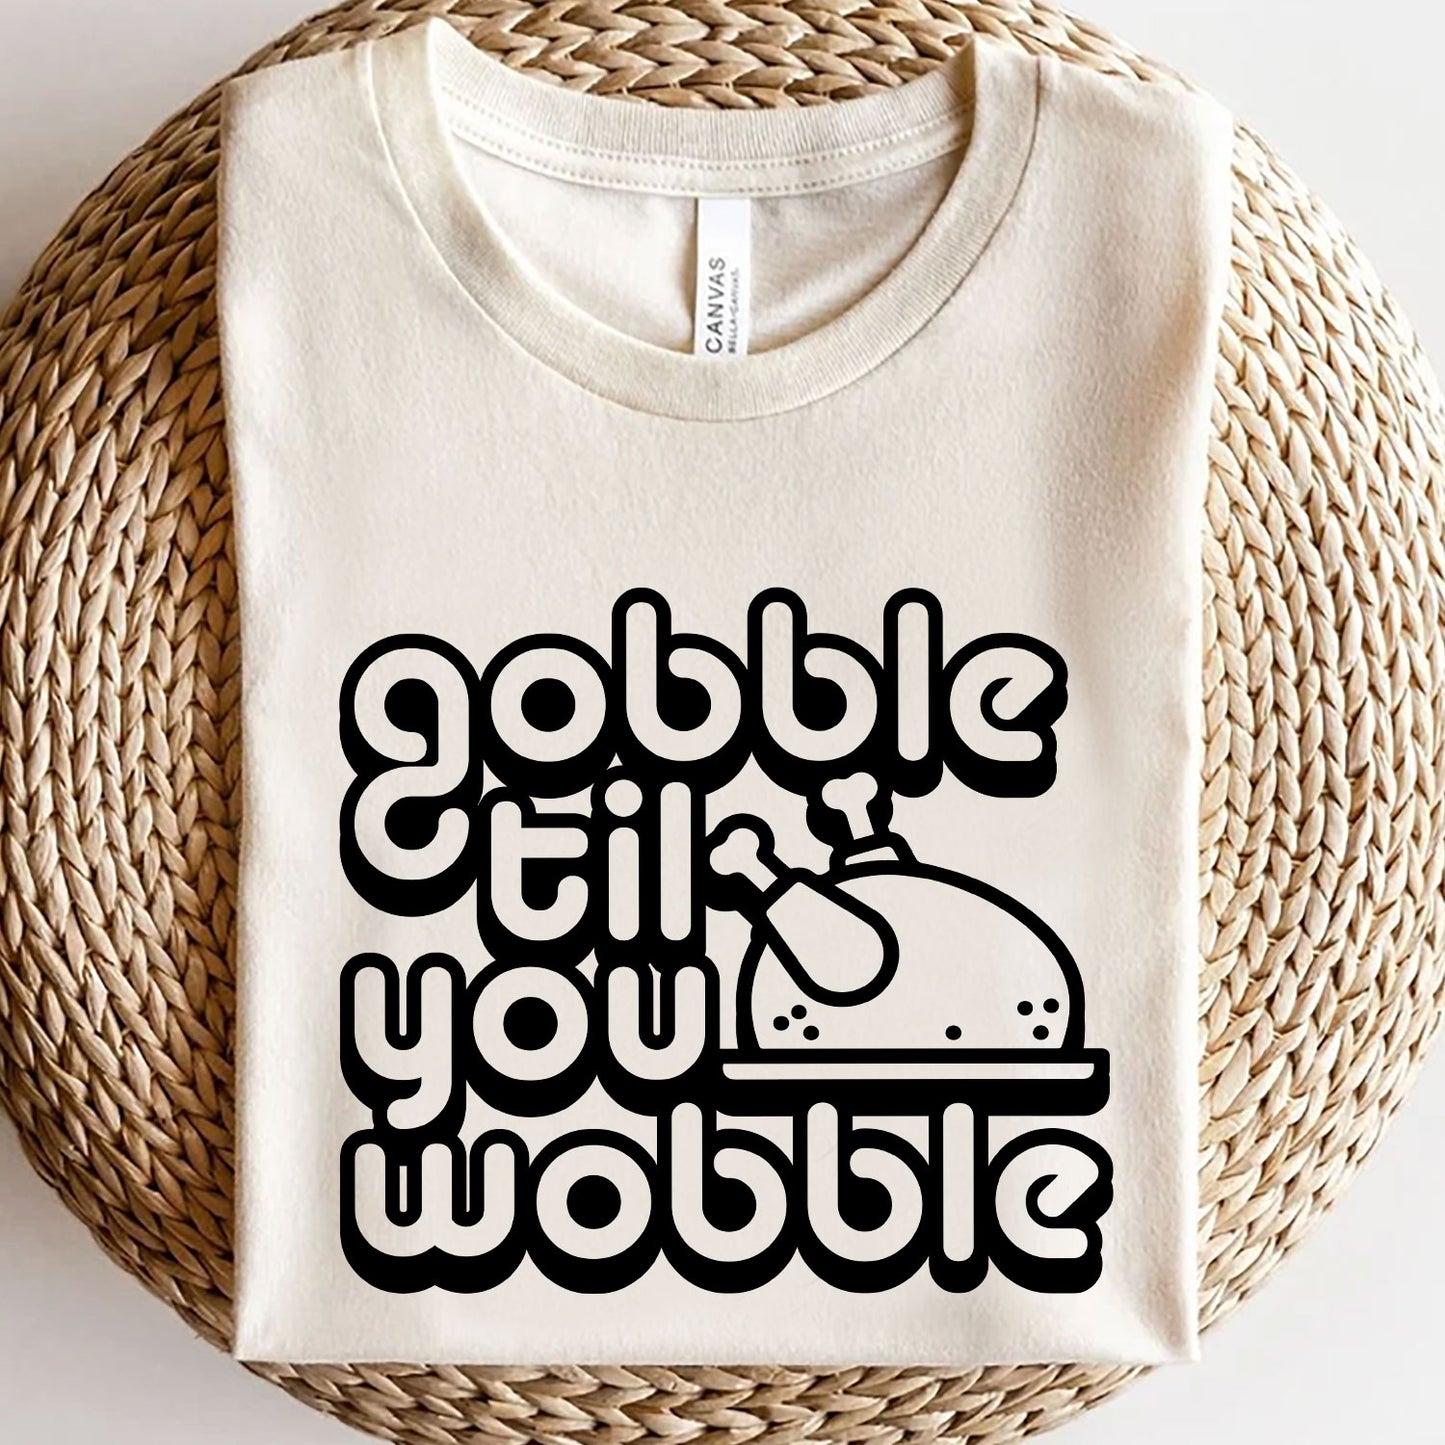 Gobble Wobble- Screen Print Transfer